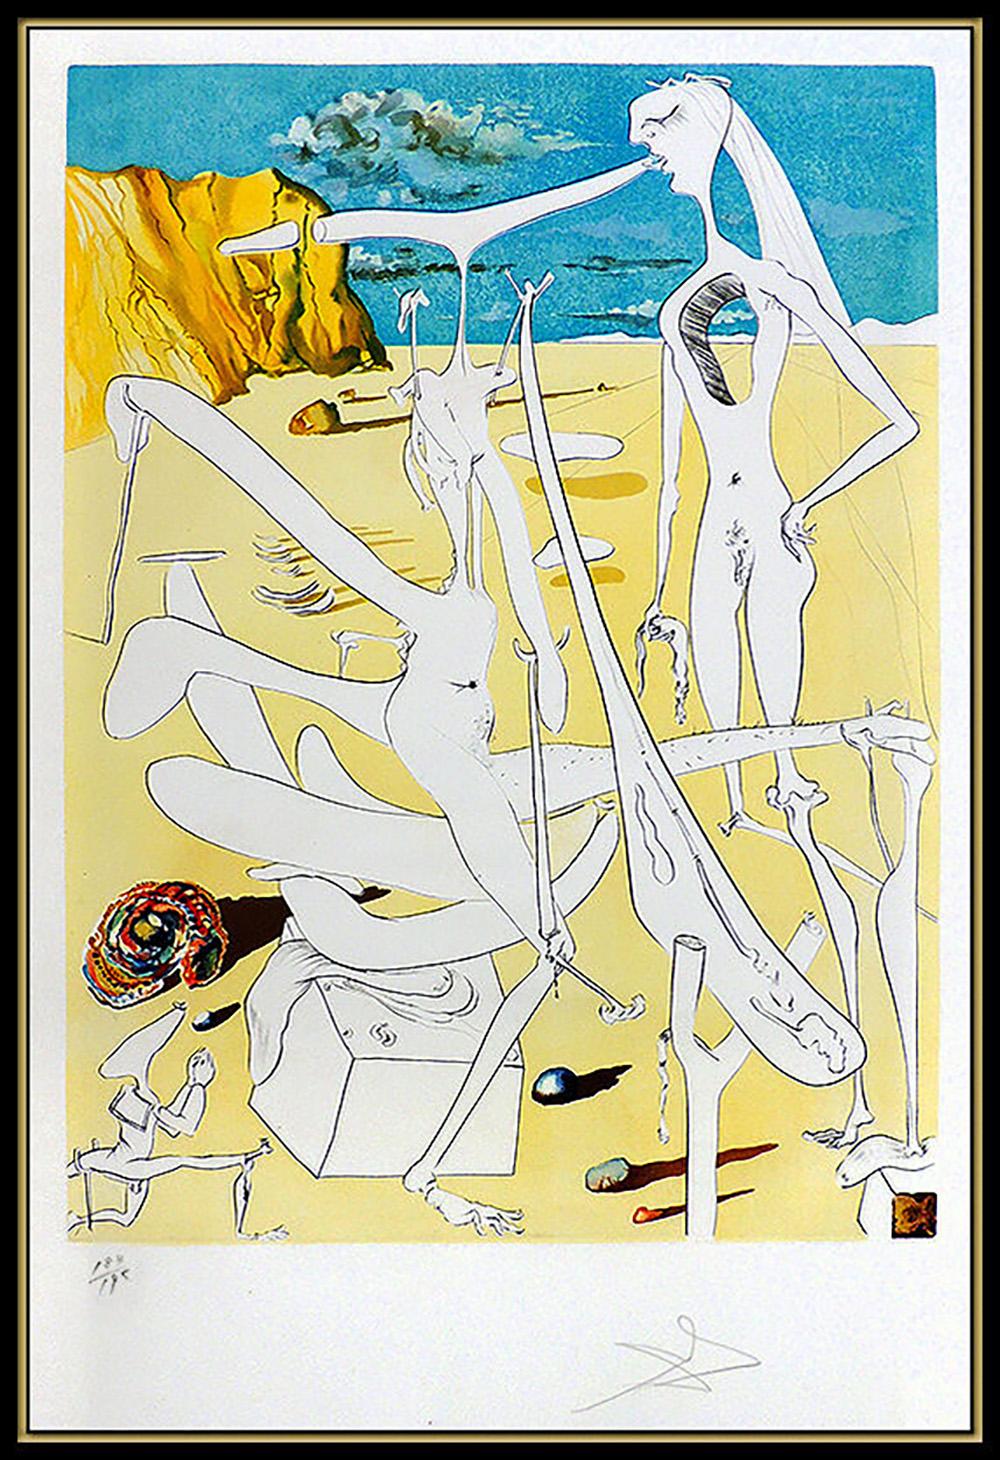 Salvador Dali Original Color Etching Hand Signed Surreal Large Nude Portrait Art - Surrealist Print by Salvador Dalí